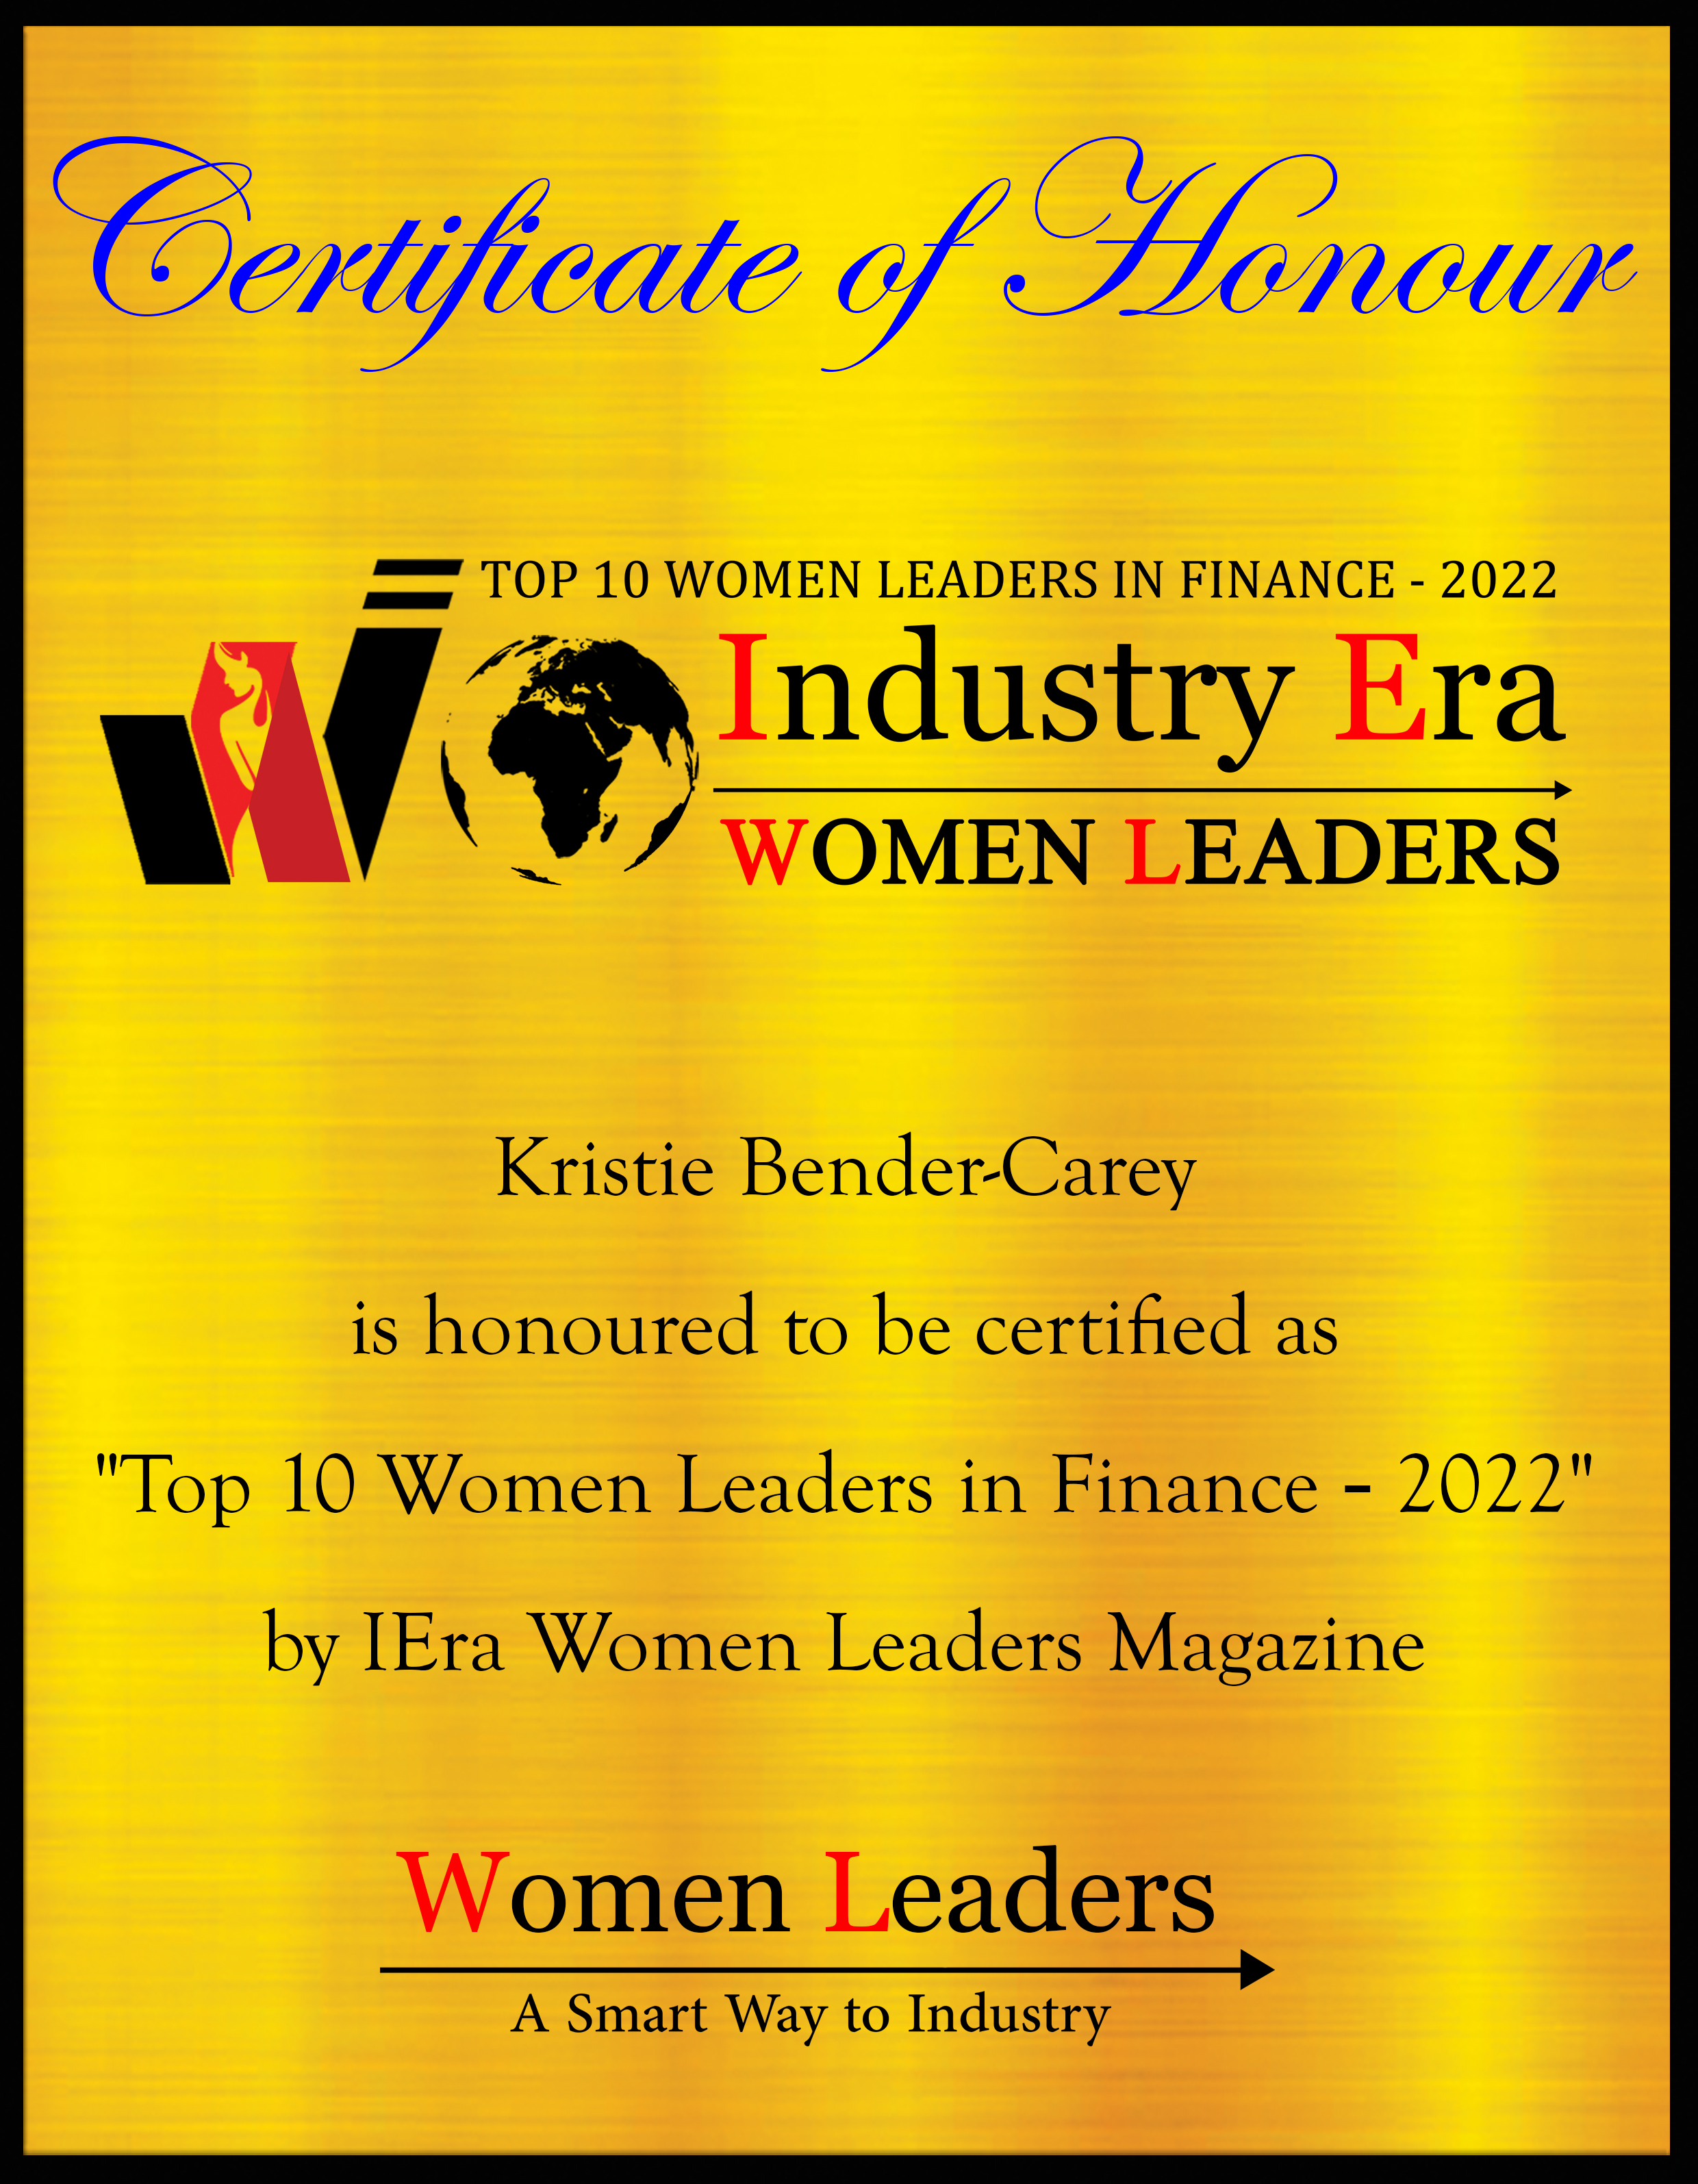 Kristie Bender-Carey CEO of Bender Carey-Capital, Top 10 Women Leaders in Finance of 2022